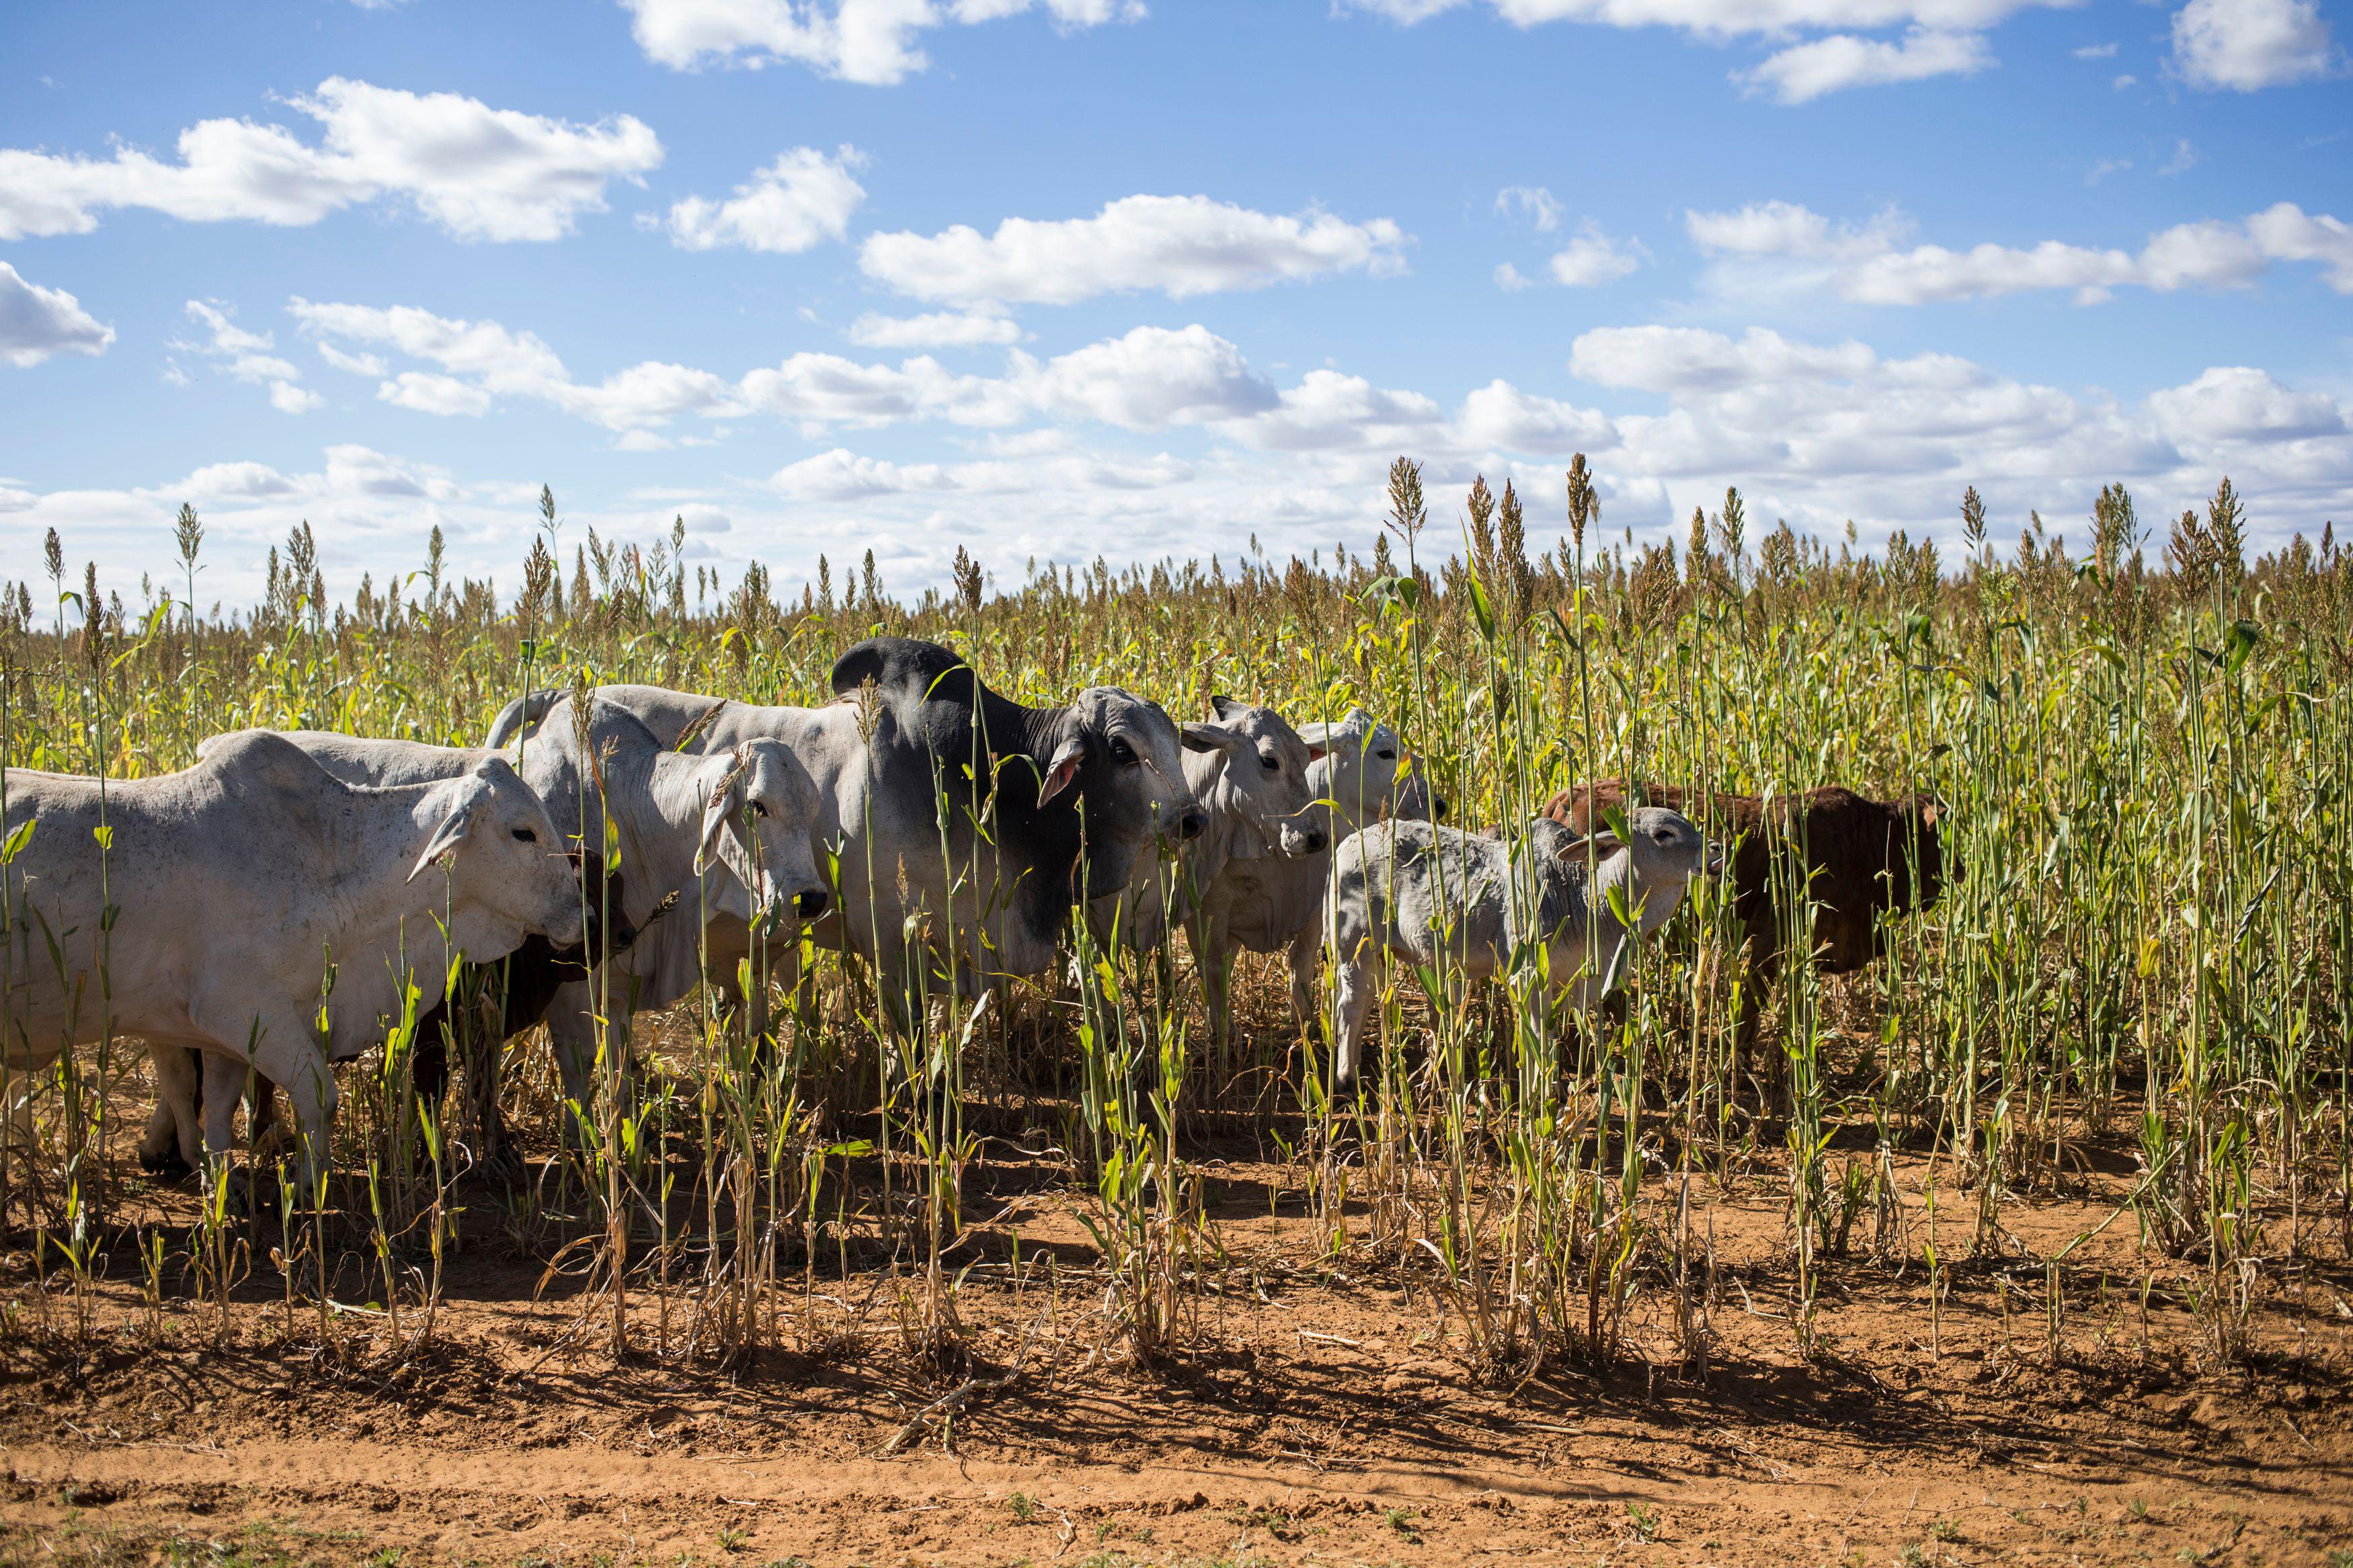 Cows walk between crops in a sparse field.